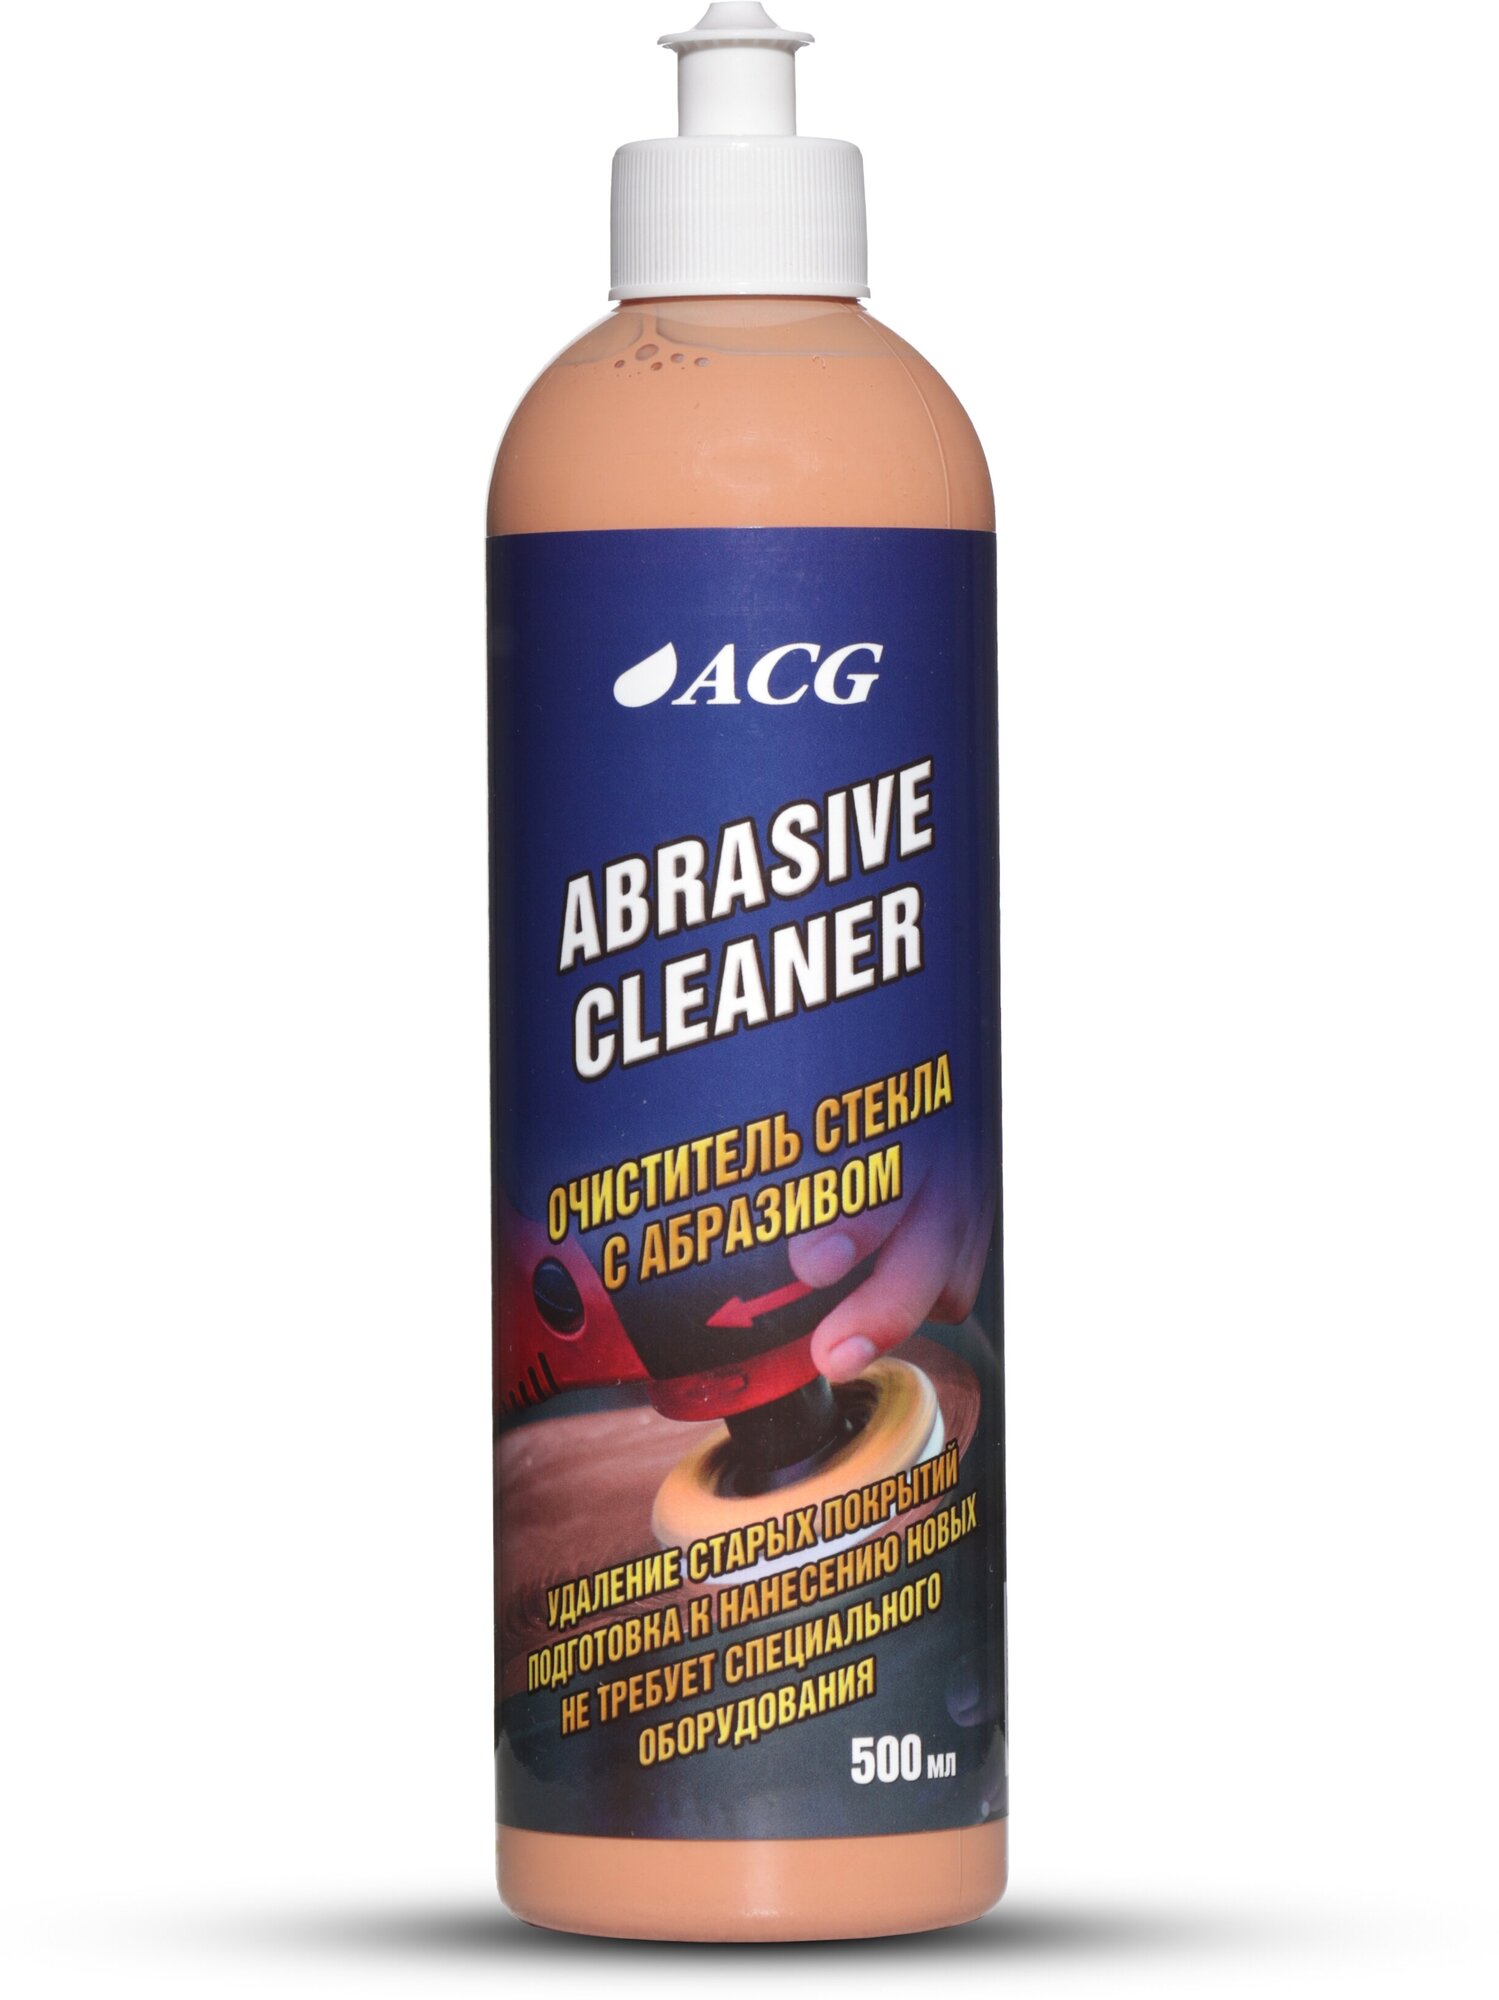 Abrasive cleaner Очиститель стекла с абразивом ACG